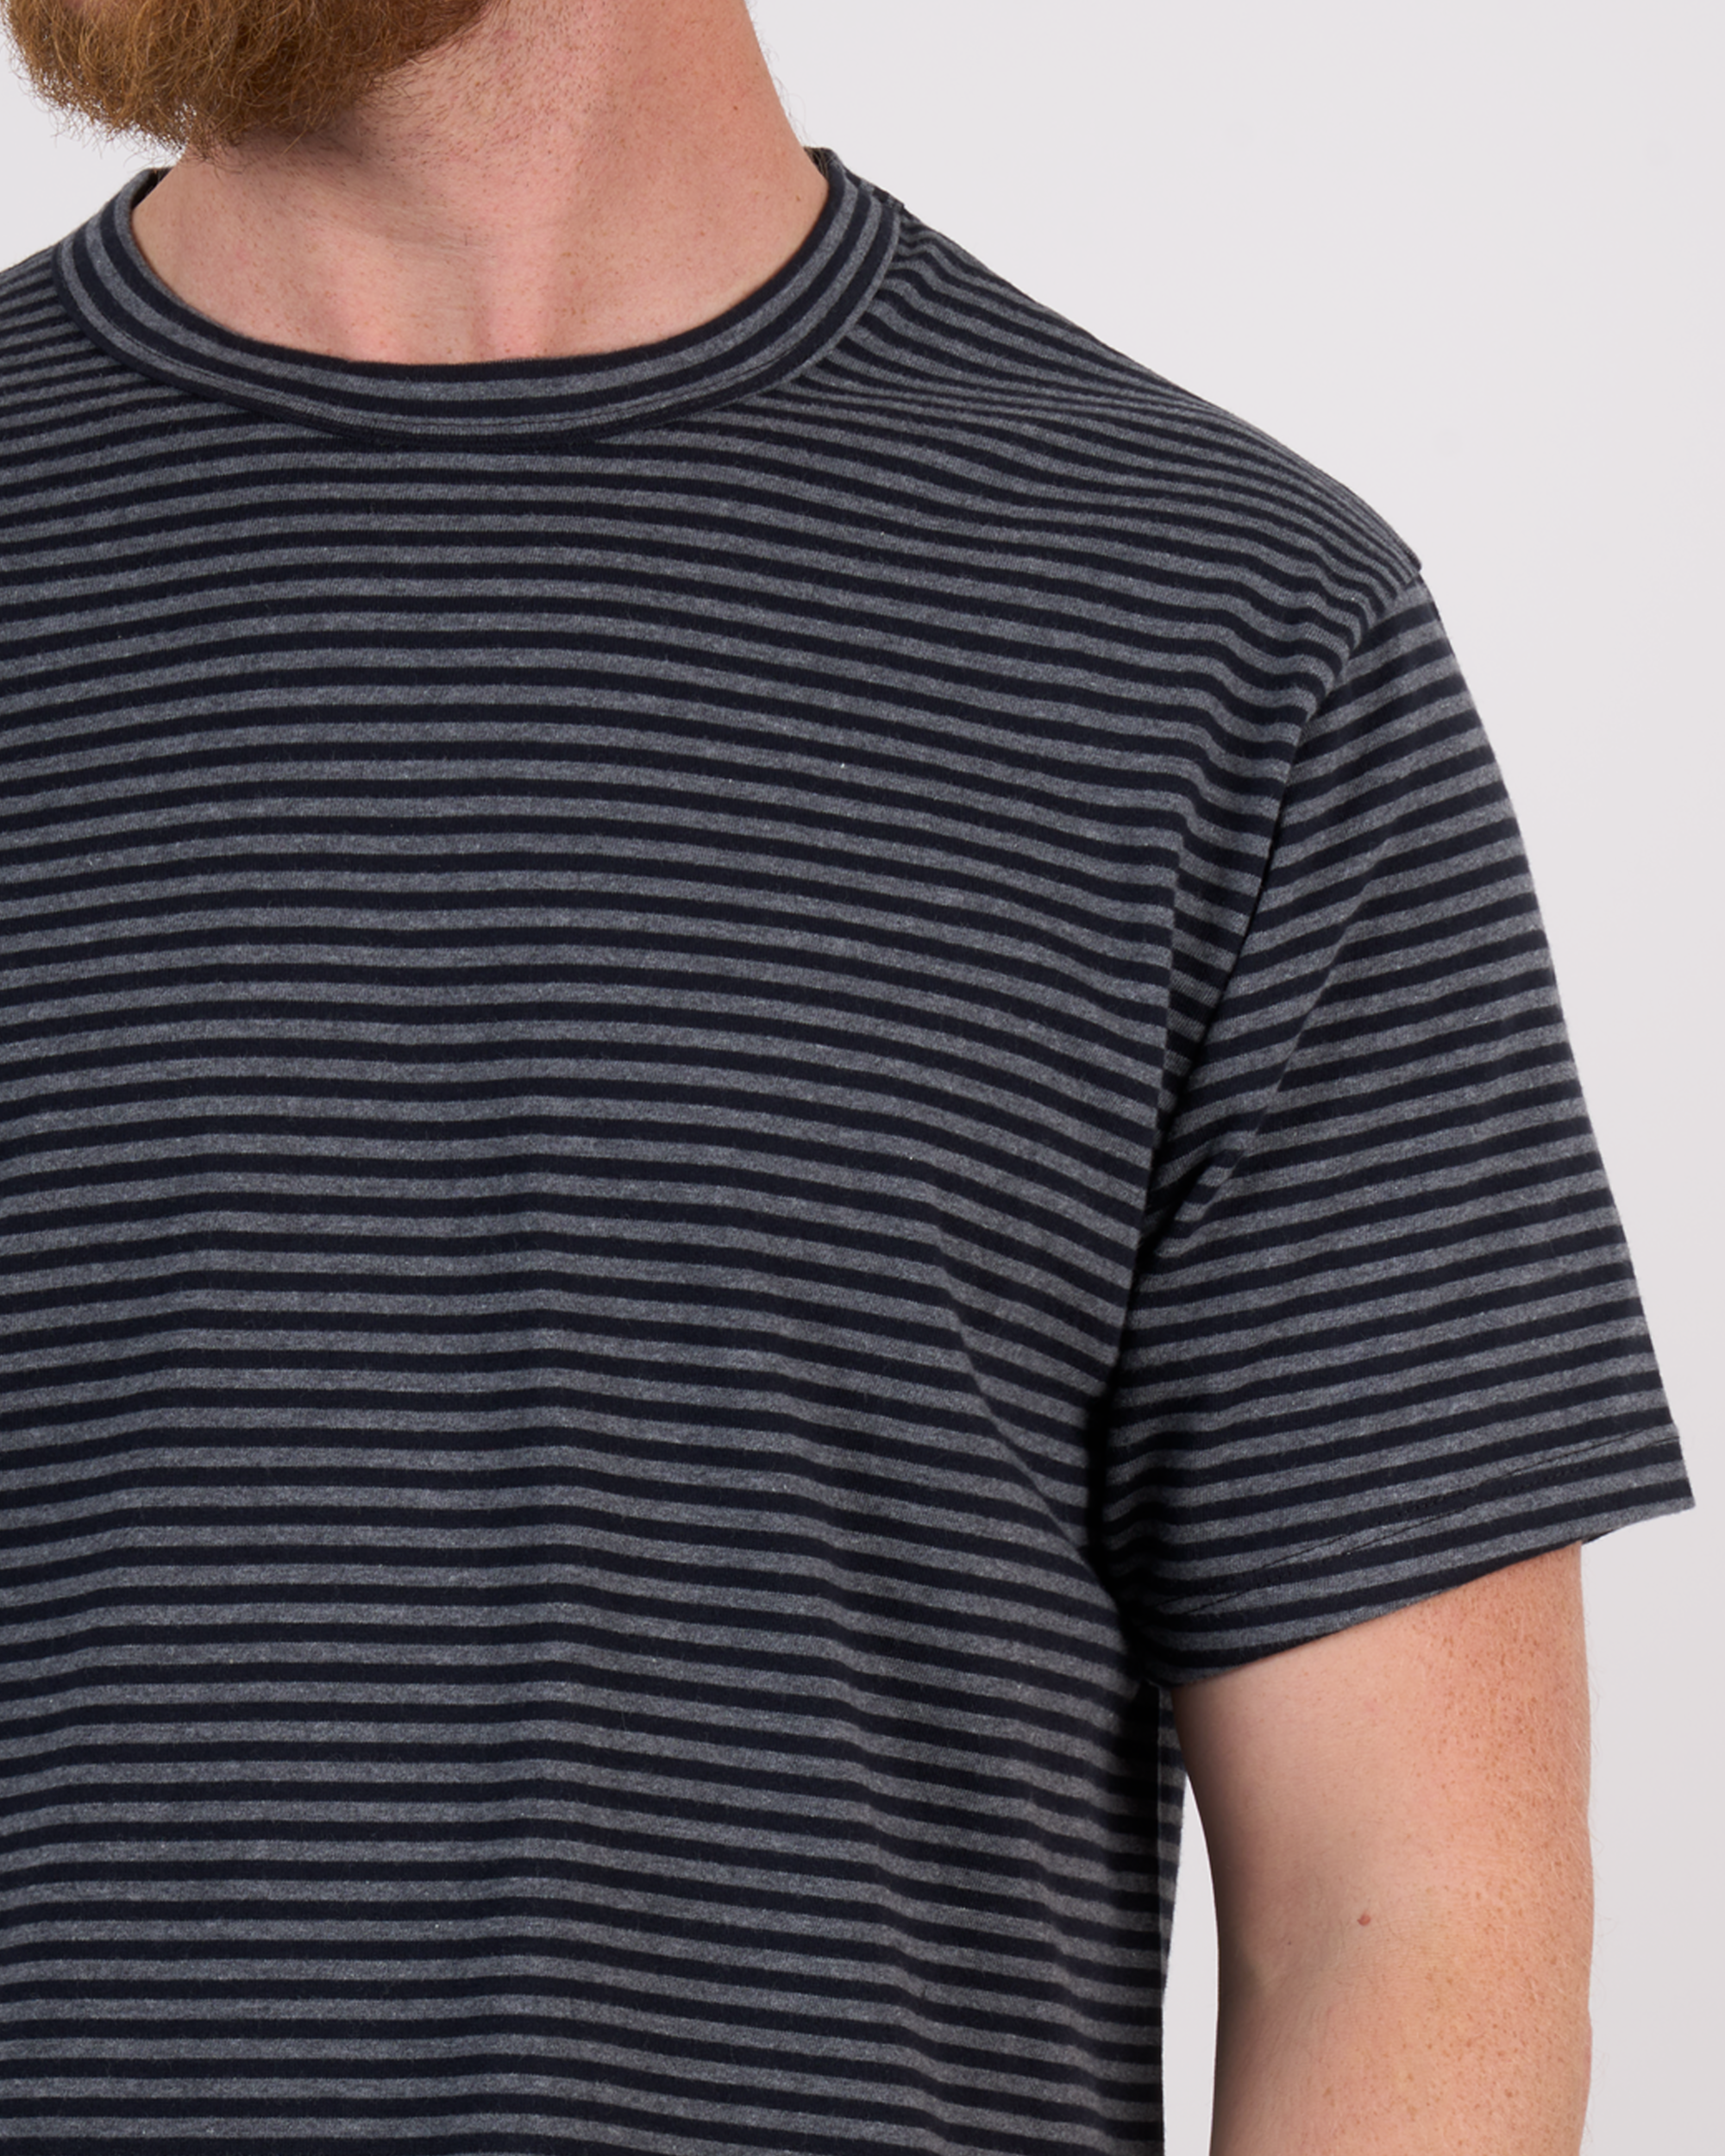 Foreign Rider Co Cotton Navy Grey Vintage Stripe T-Shirt Chest Detail